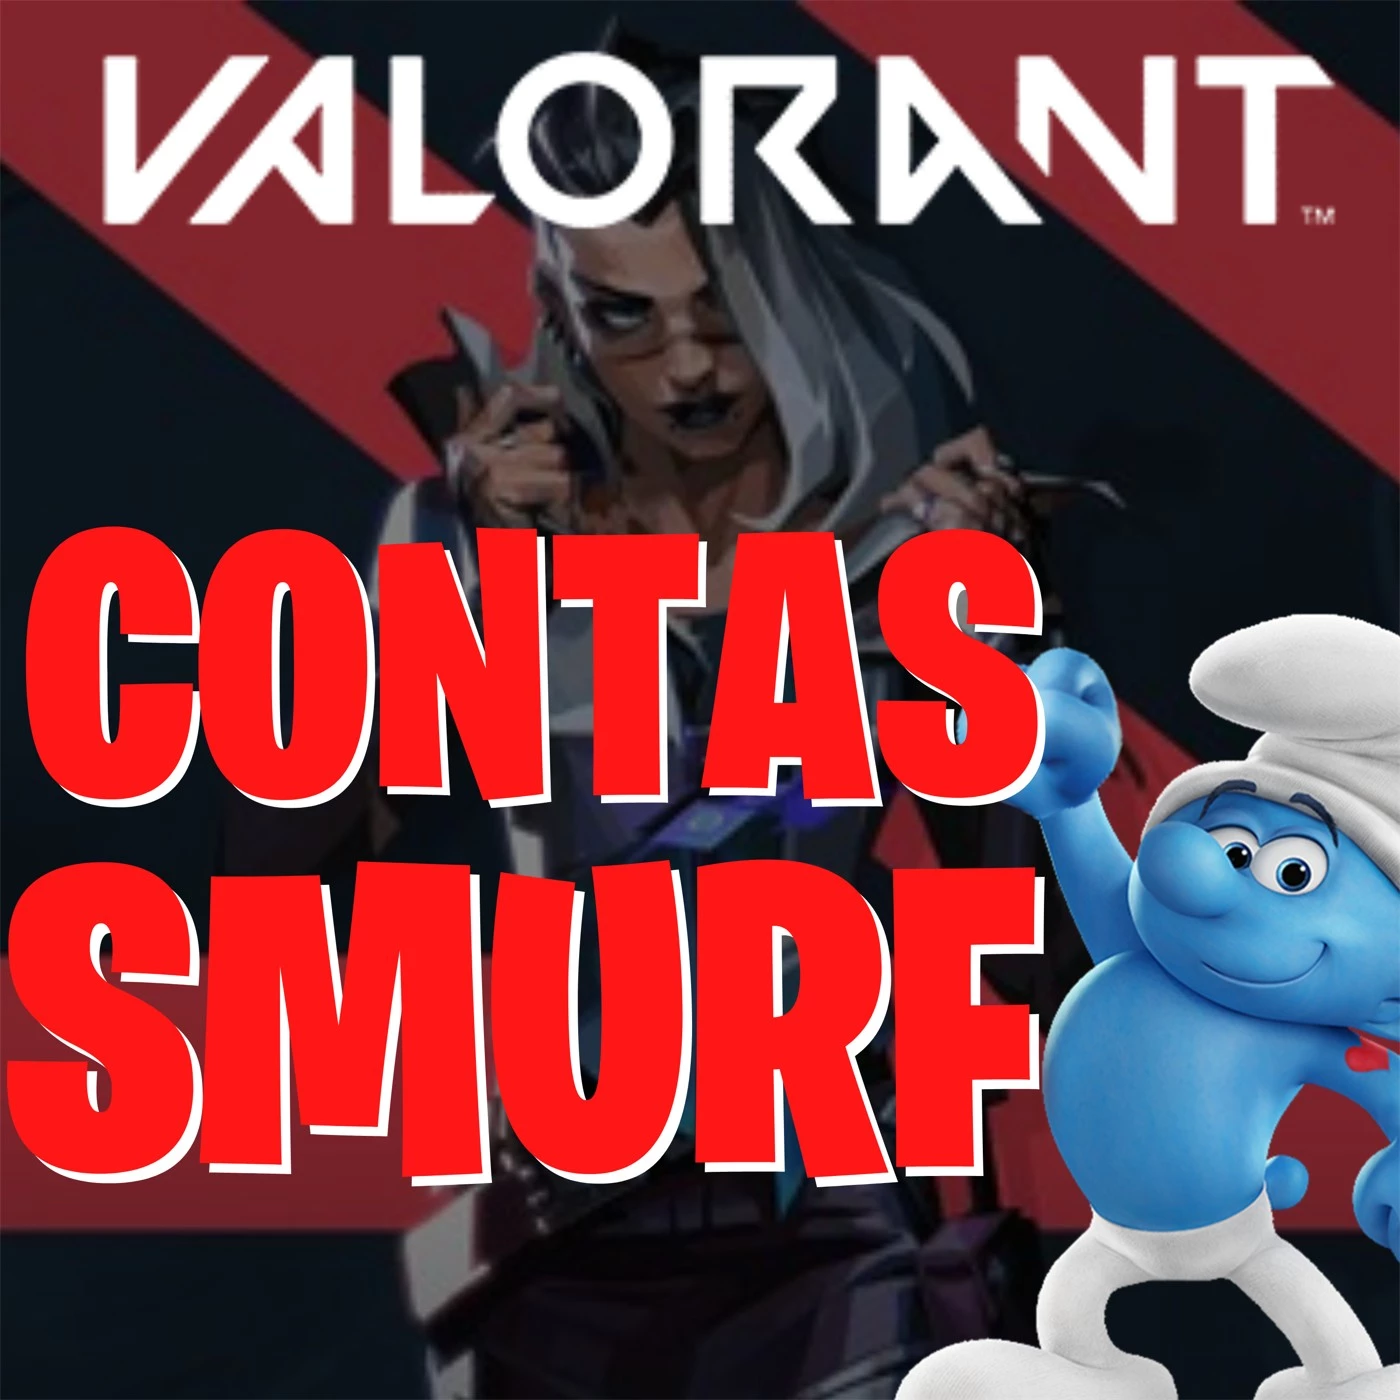 Contas Smurf Valorant - Pronta Para Ranked - DFG